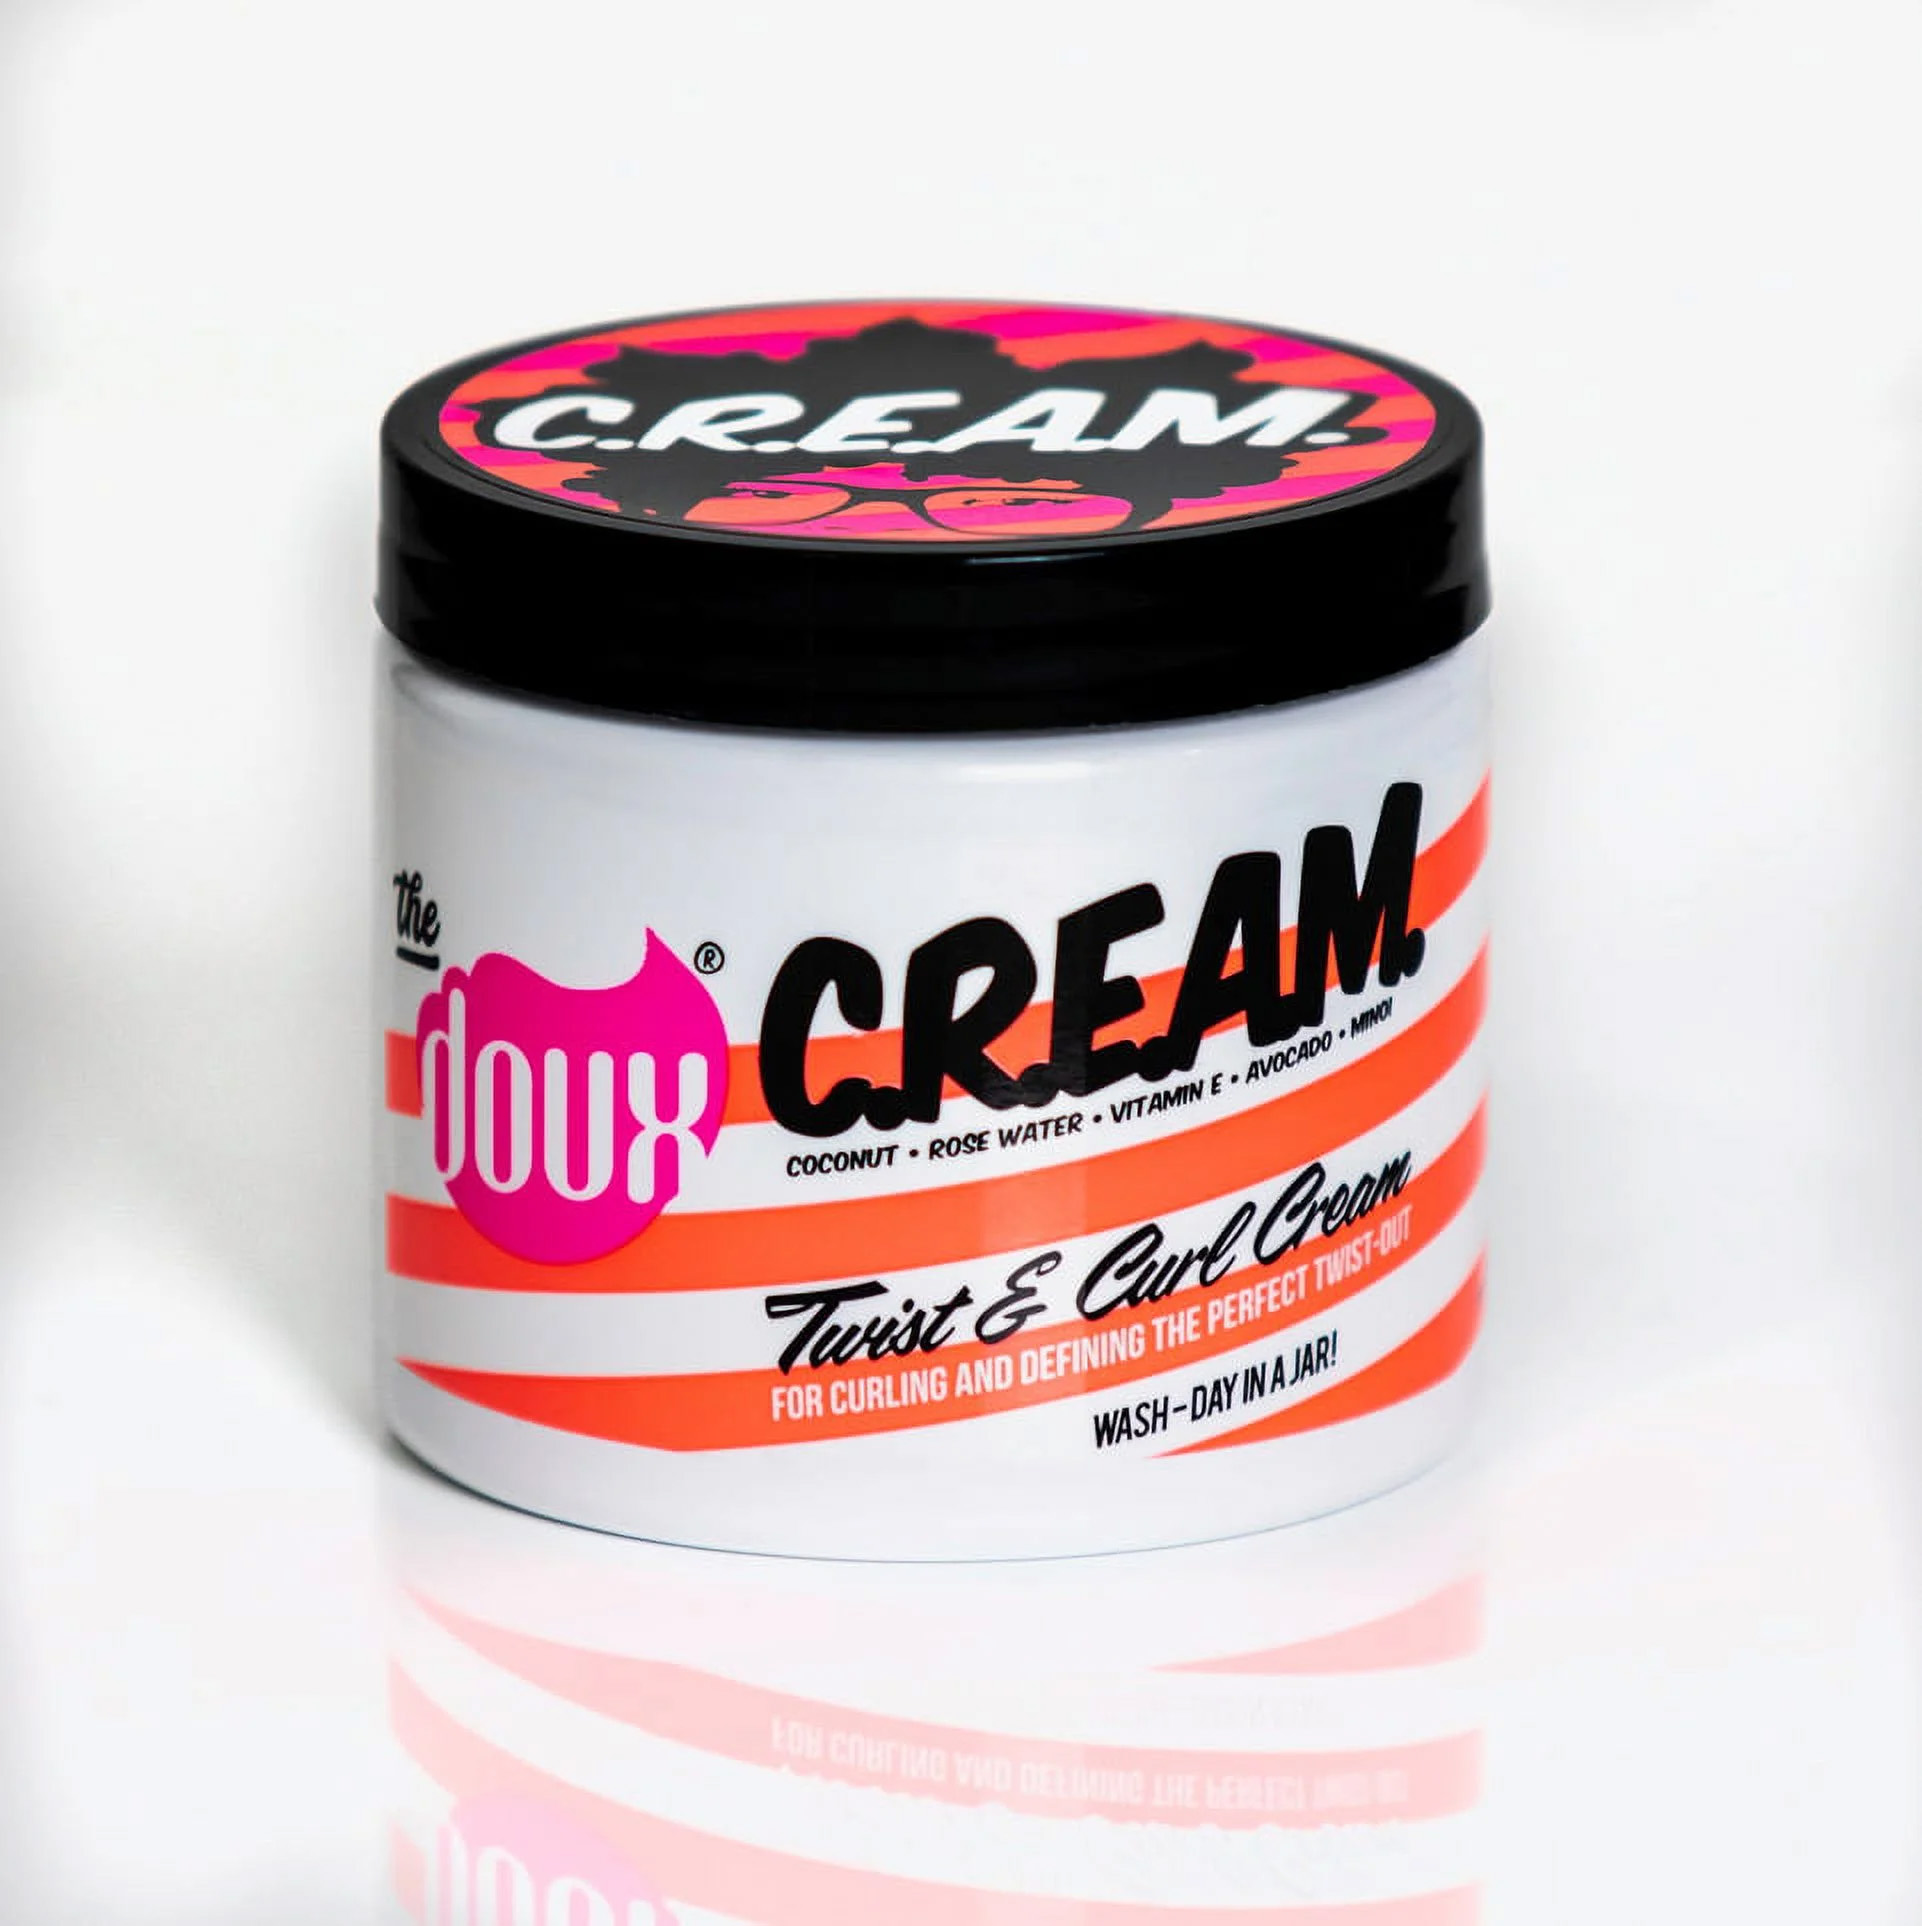 The Doux Creme Twist & Curl Cream 454g